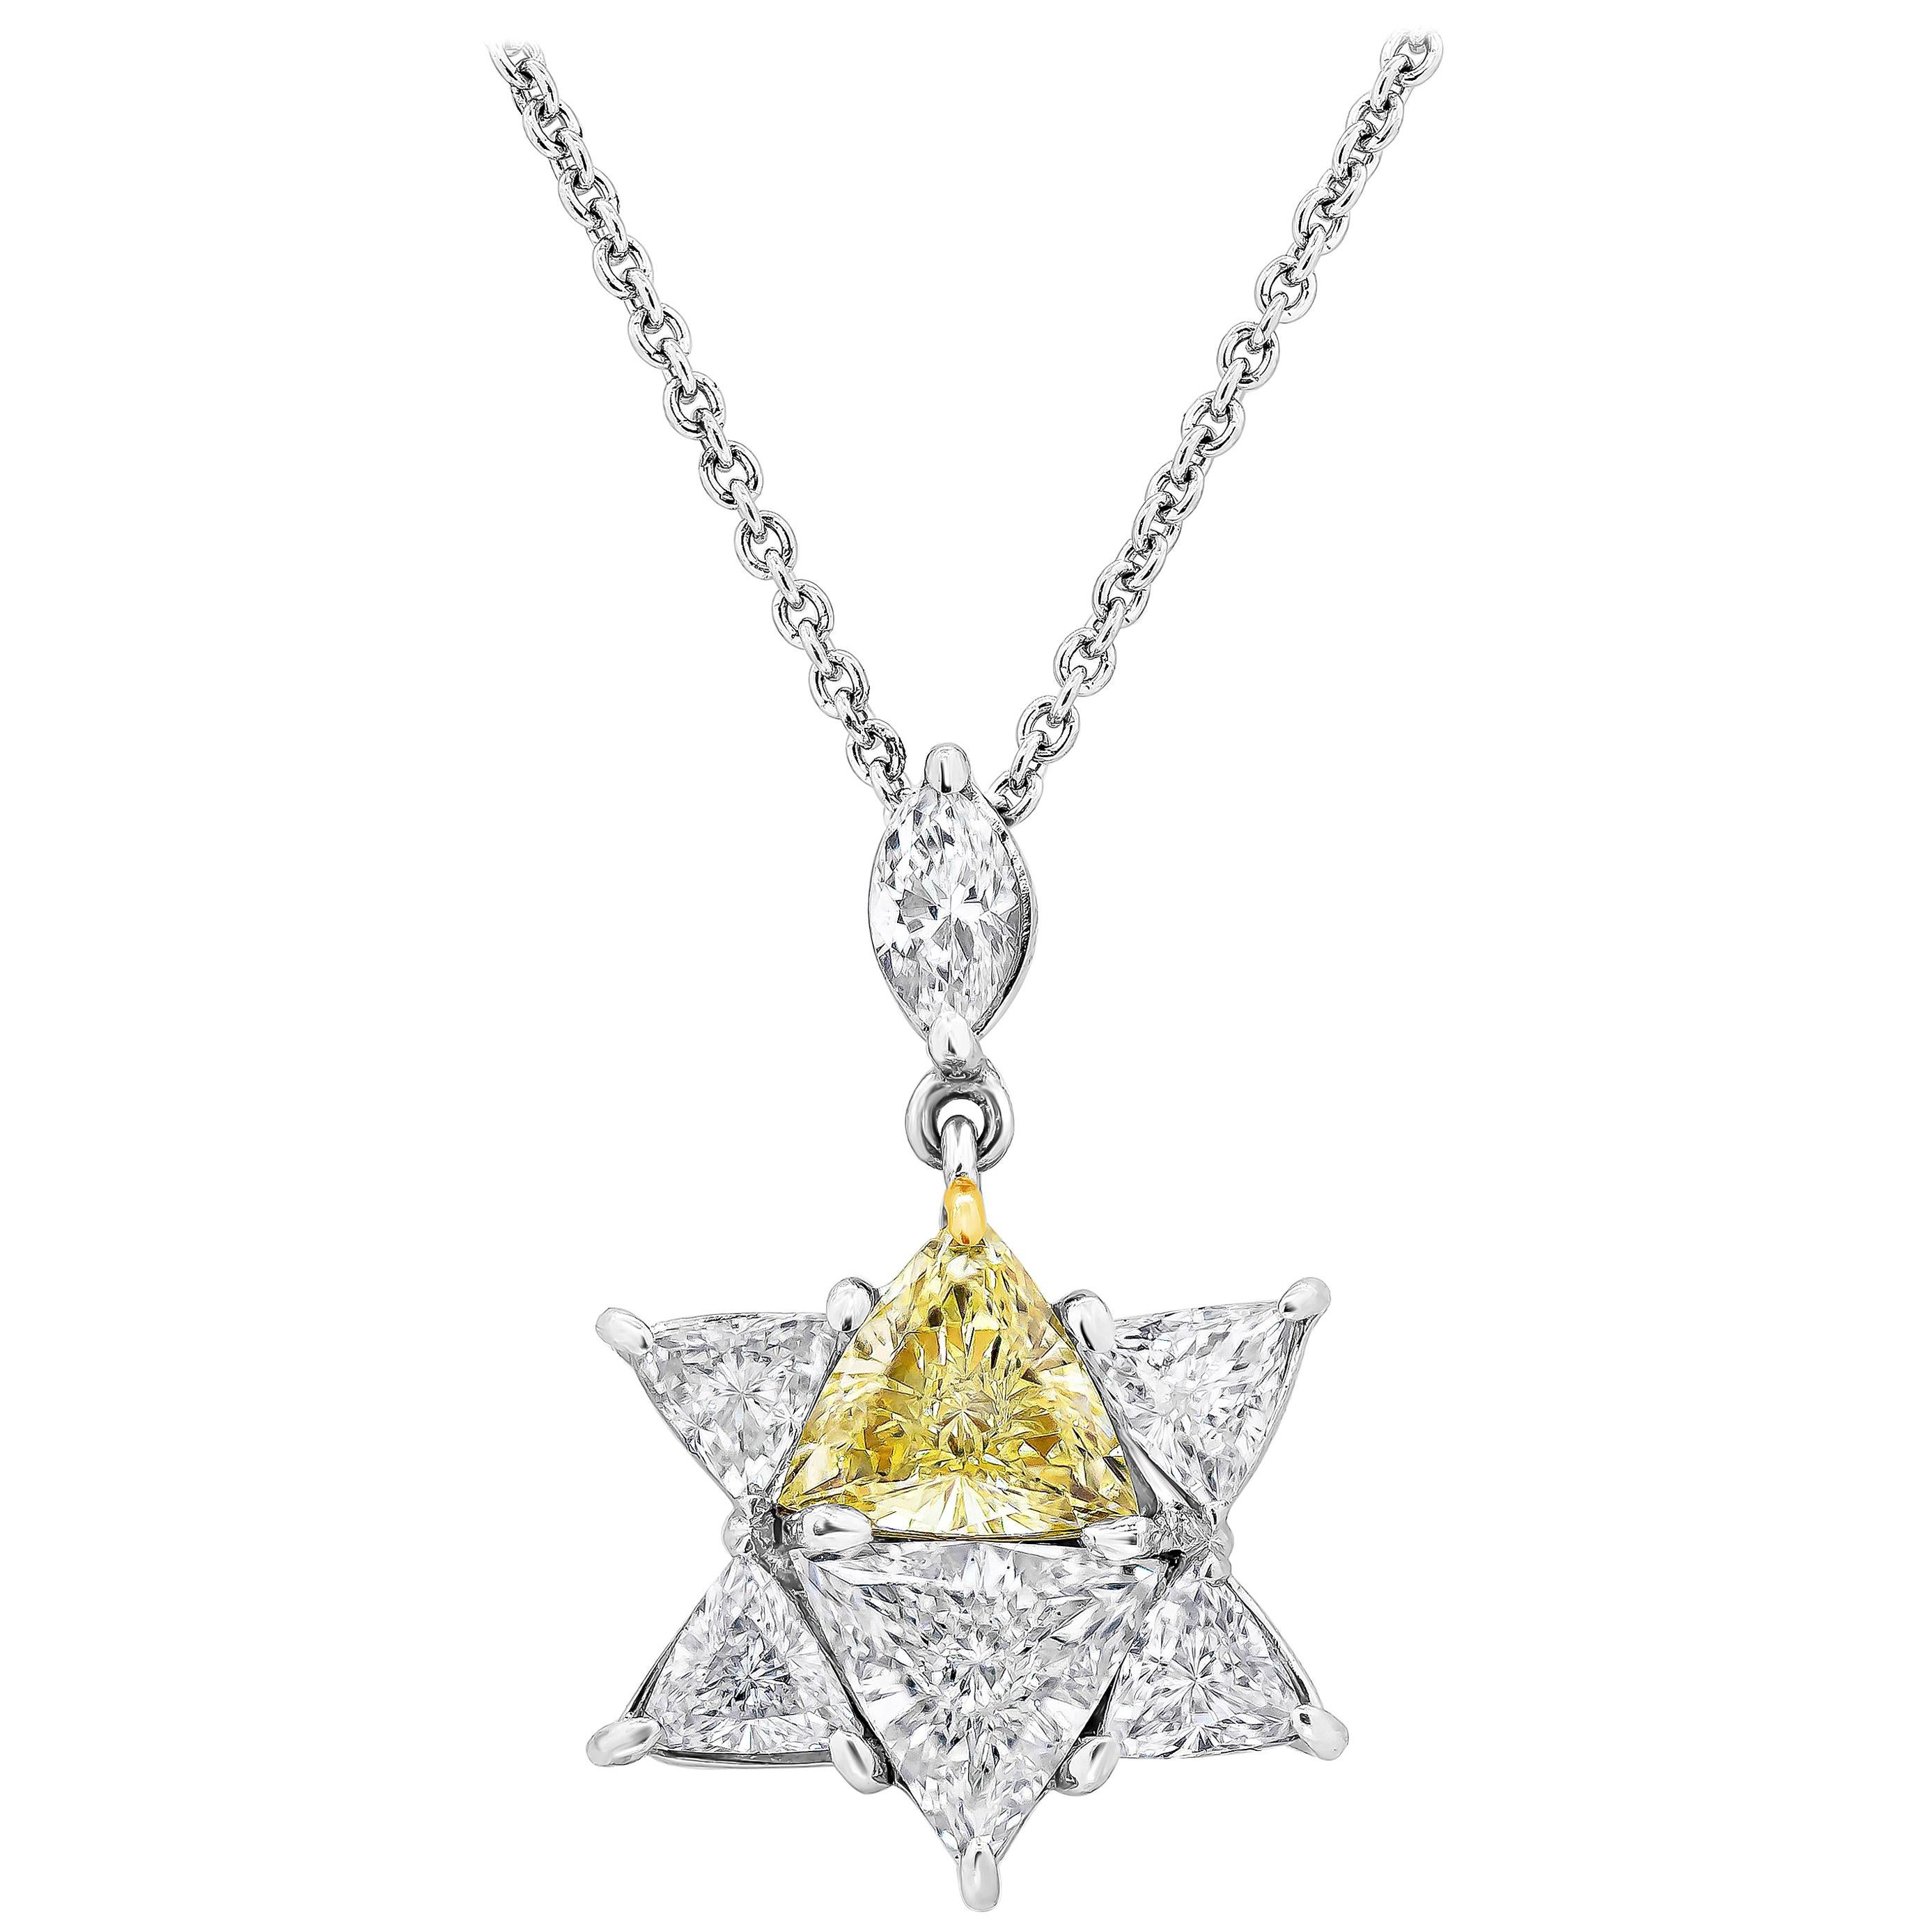 Roman Malakov 1.77 Carats Total Mixed Diamond Trillion Cut Star Pendant Necklace